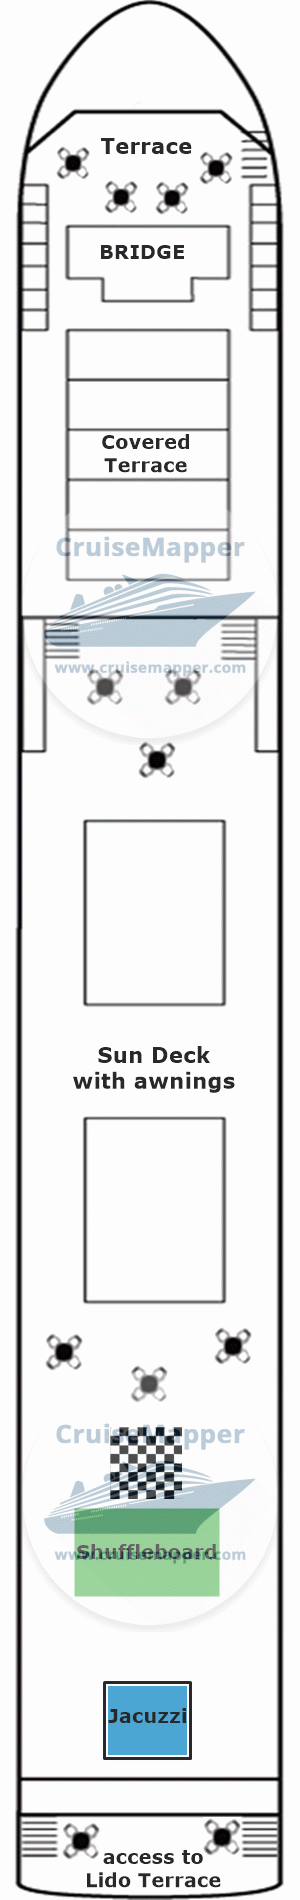 MS Asara Deck 04 - Sundeck-Pool